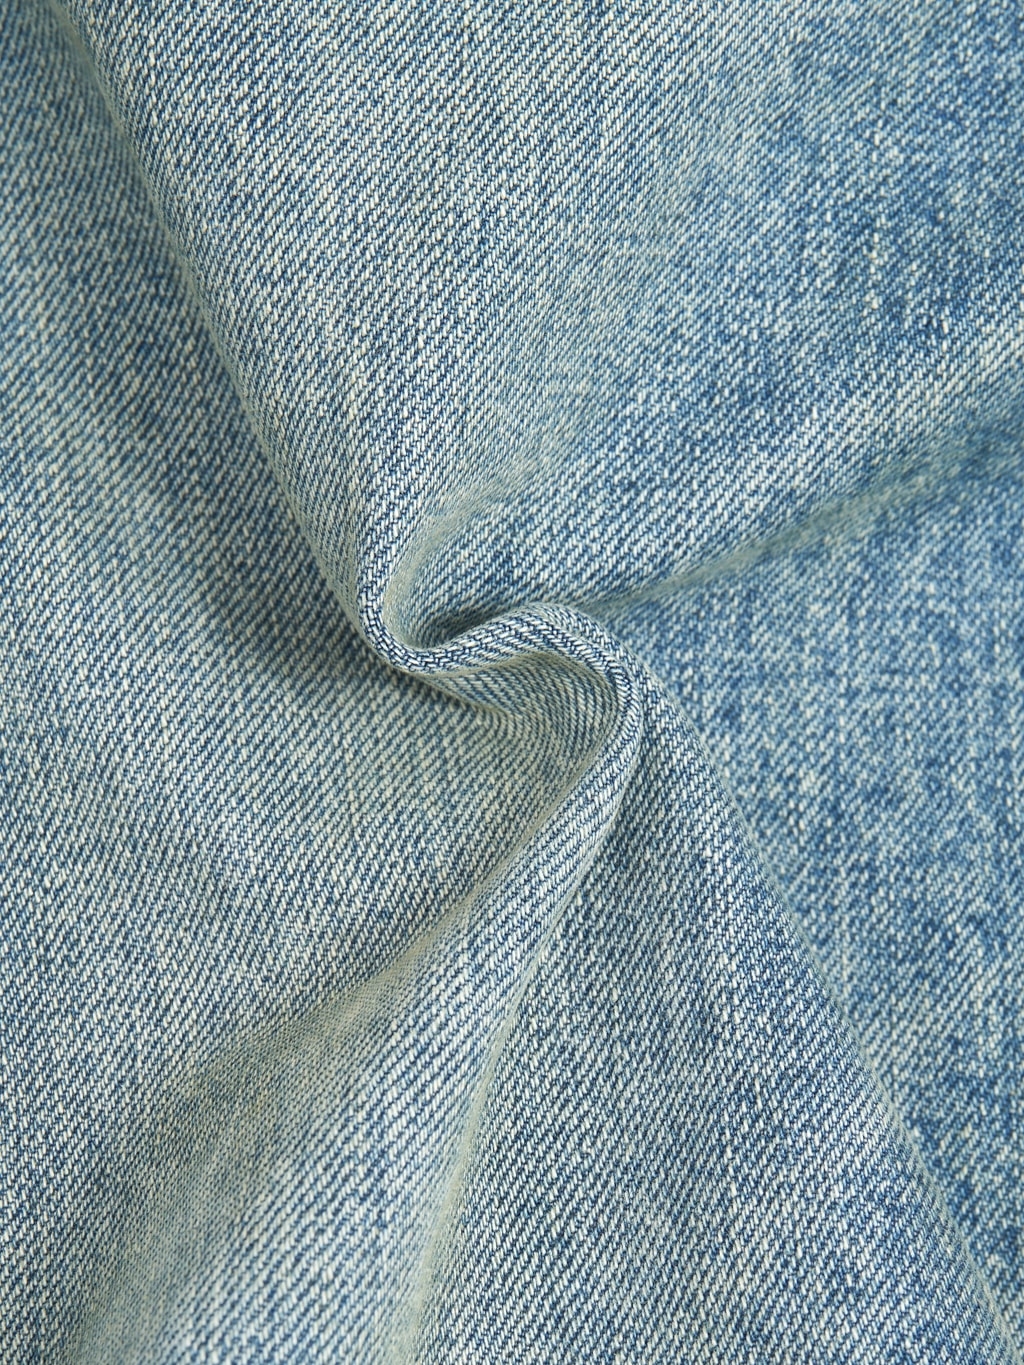 rogue territory strider light indigo wash selvedge jeans texture